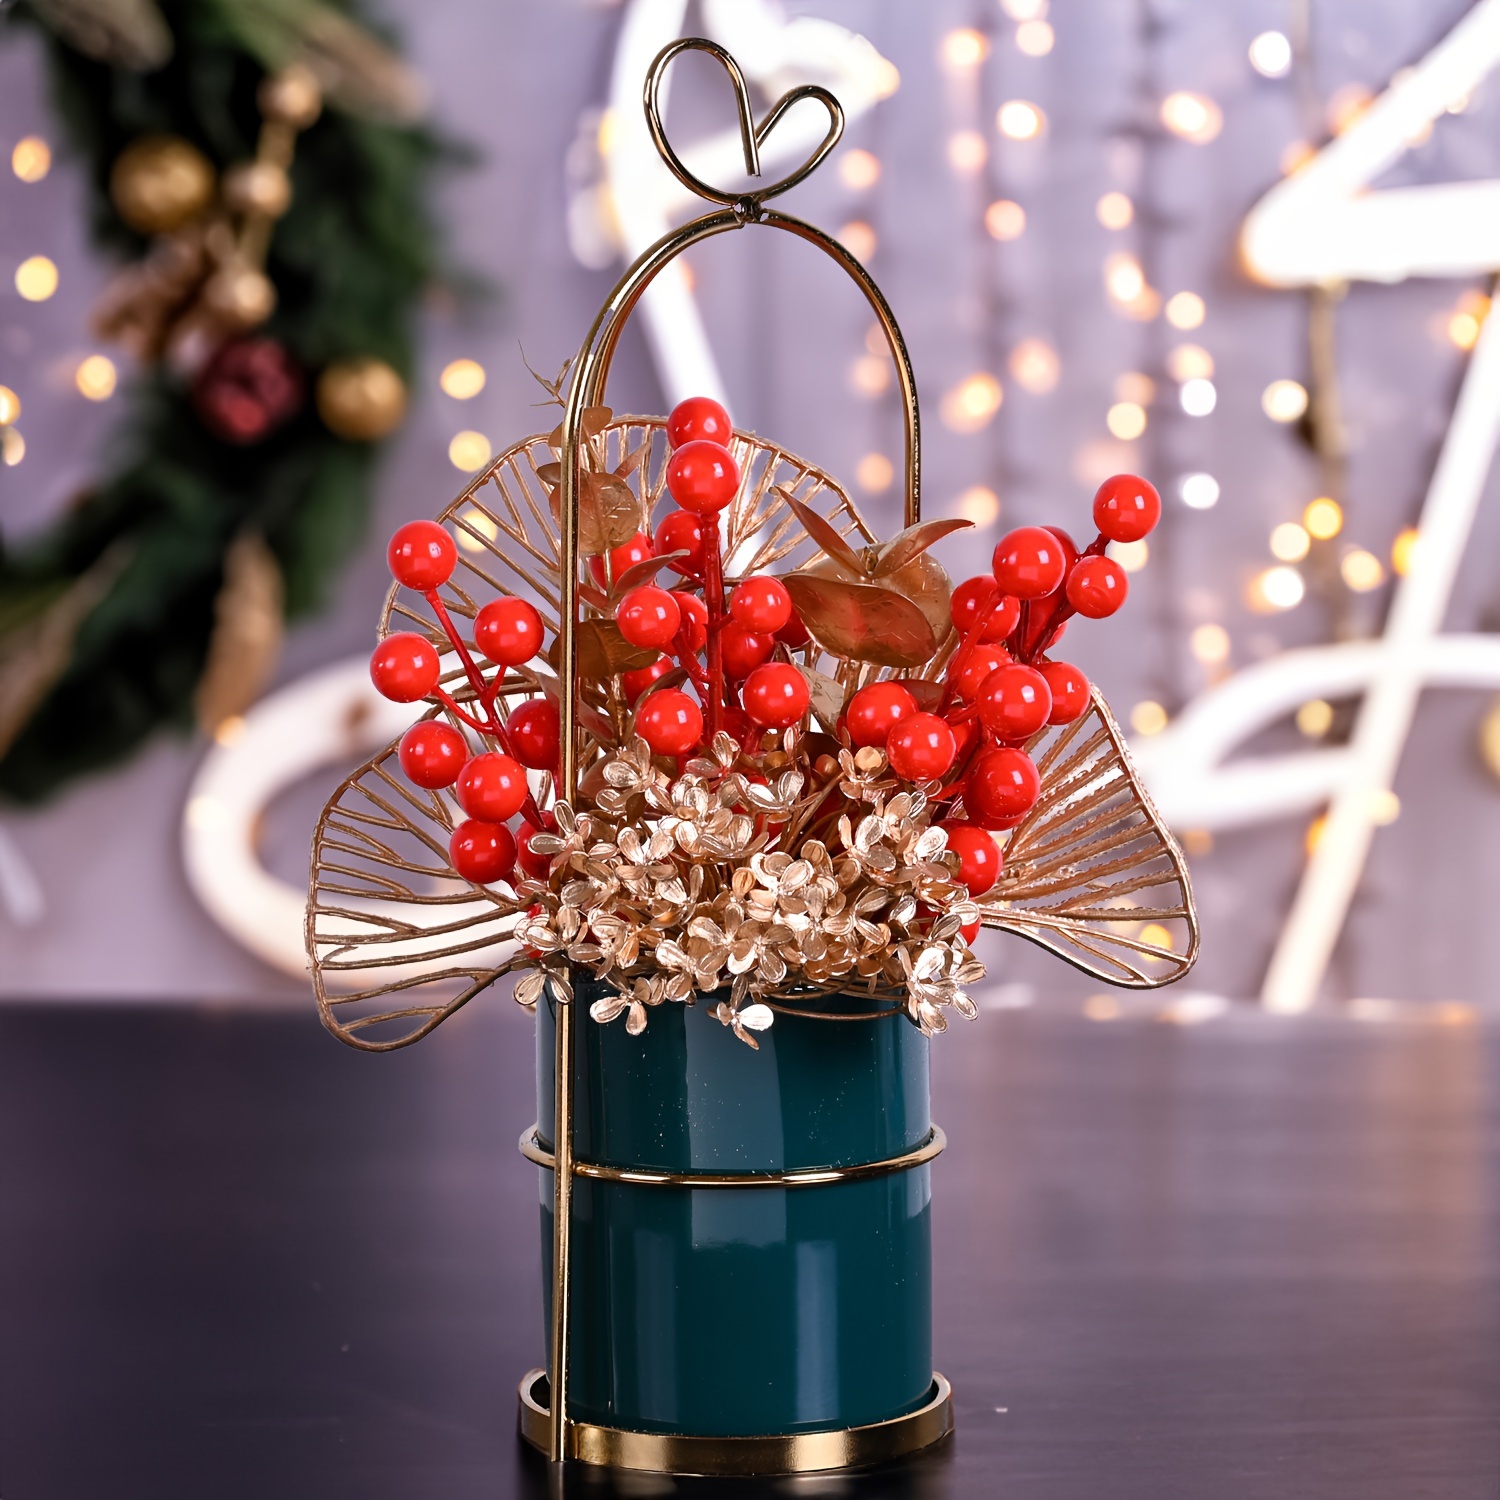 Artificial Christmas Flowers Decorations Xmas Tree Ornaments for Holiday  Floral Arrangement Centerpiece Winter Season Decor 